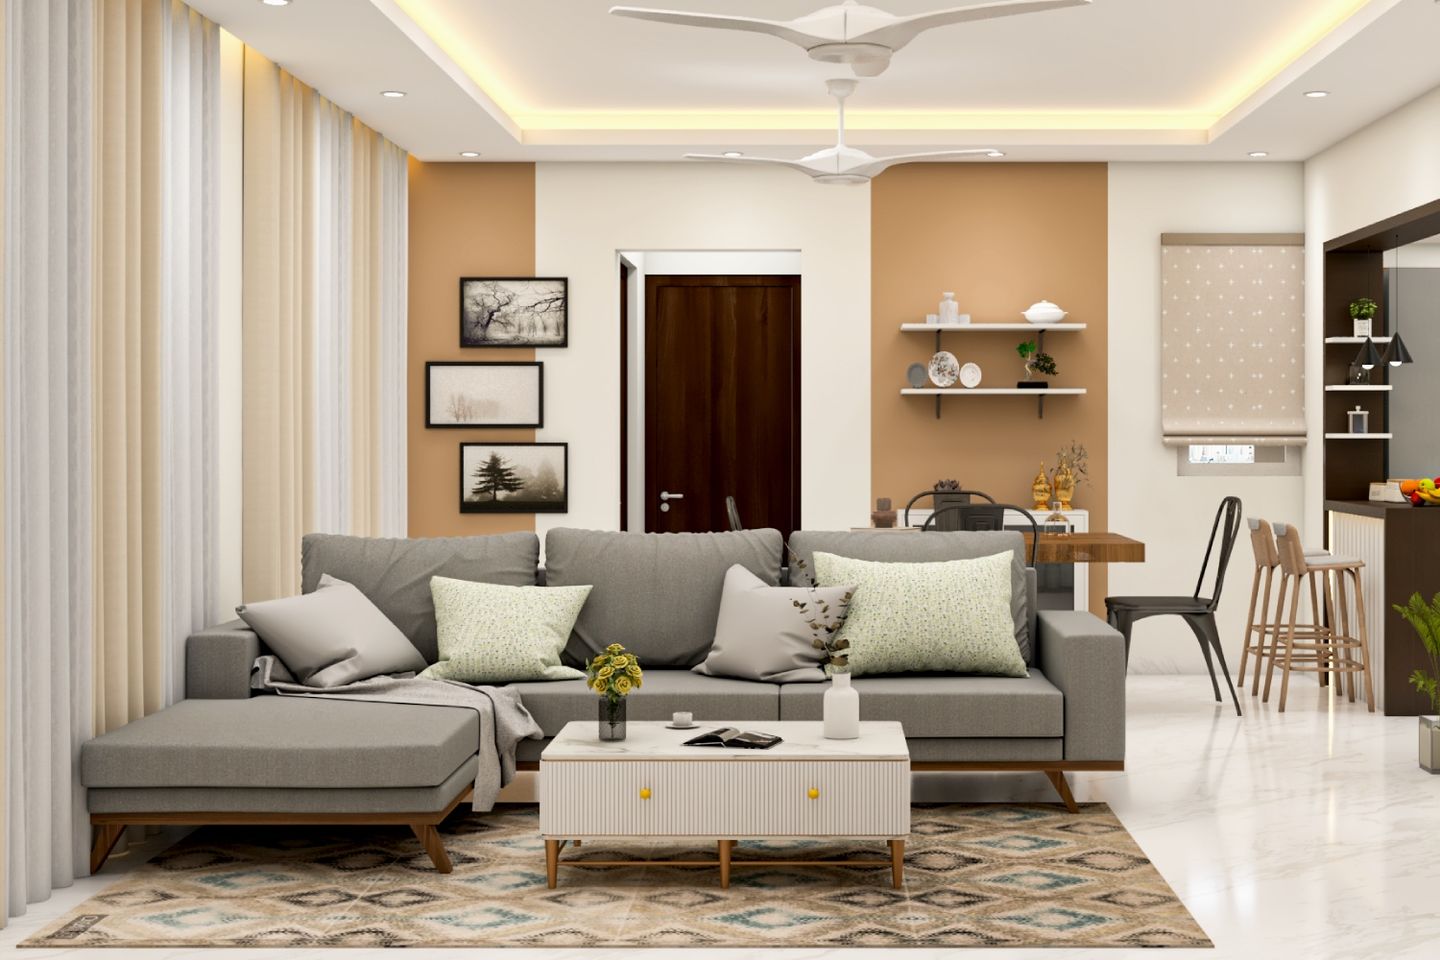 12x12 Ft Contemporary Living Room Design With L-Shaped Grey Sofa - Livspace